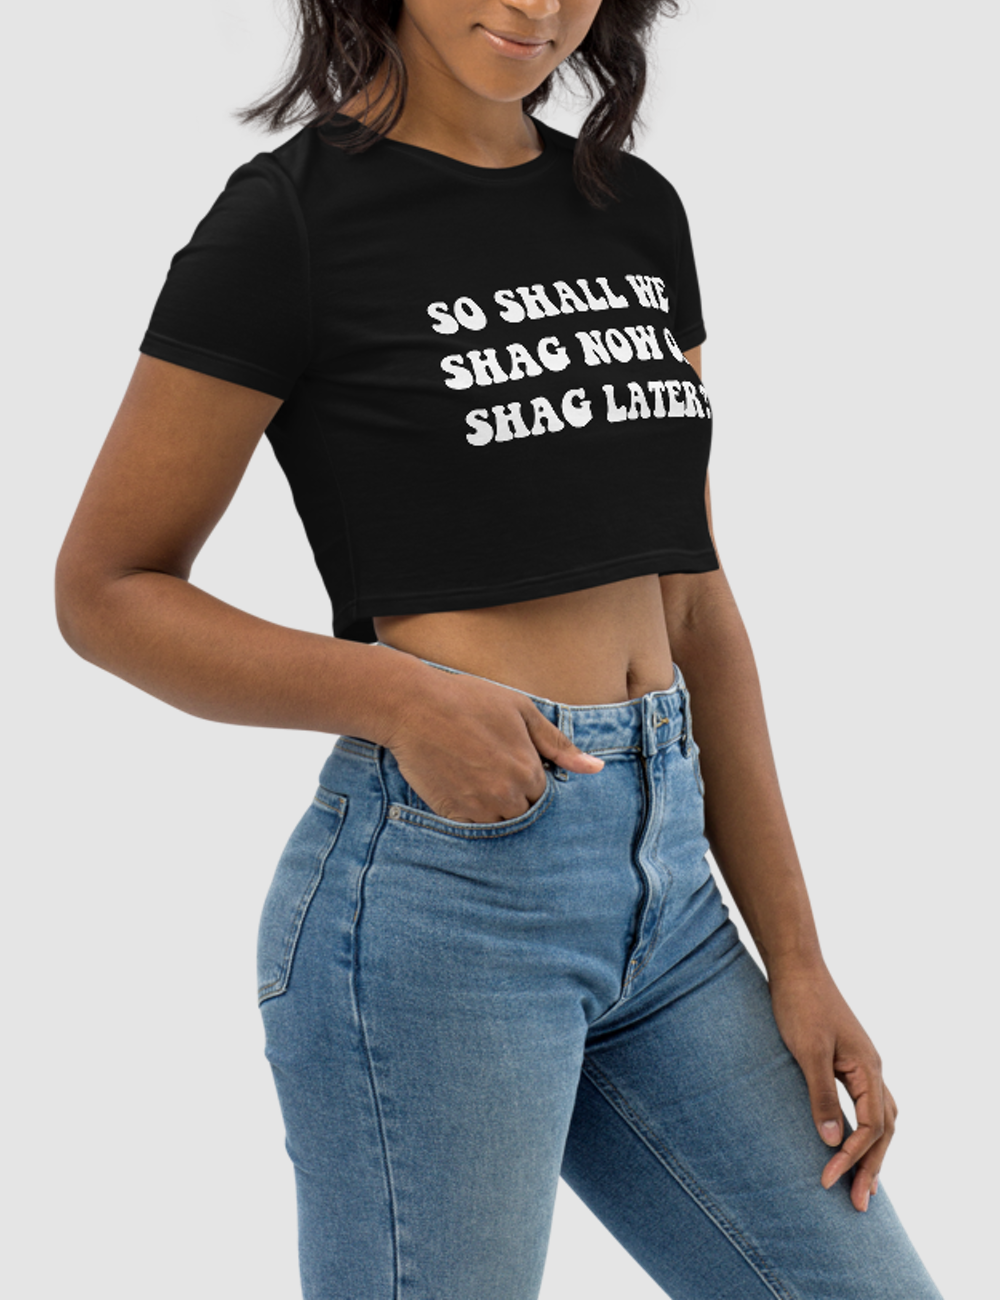 So Shall We Shag Now Or Shag Later? | Women's Crop Top T-Shirt OniTakai